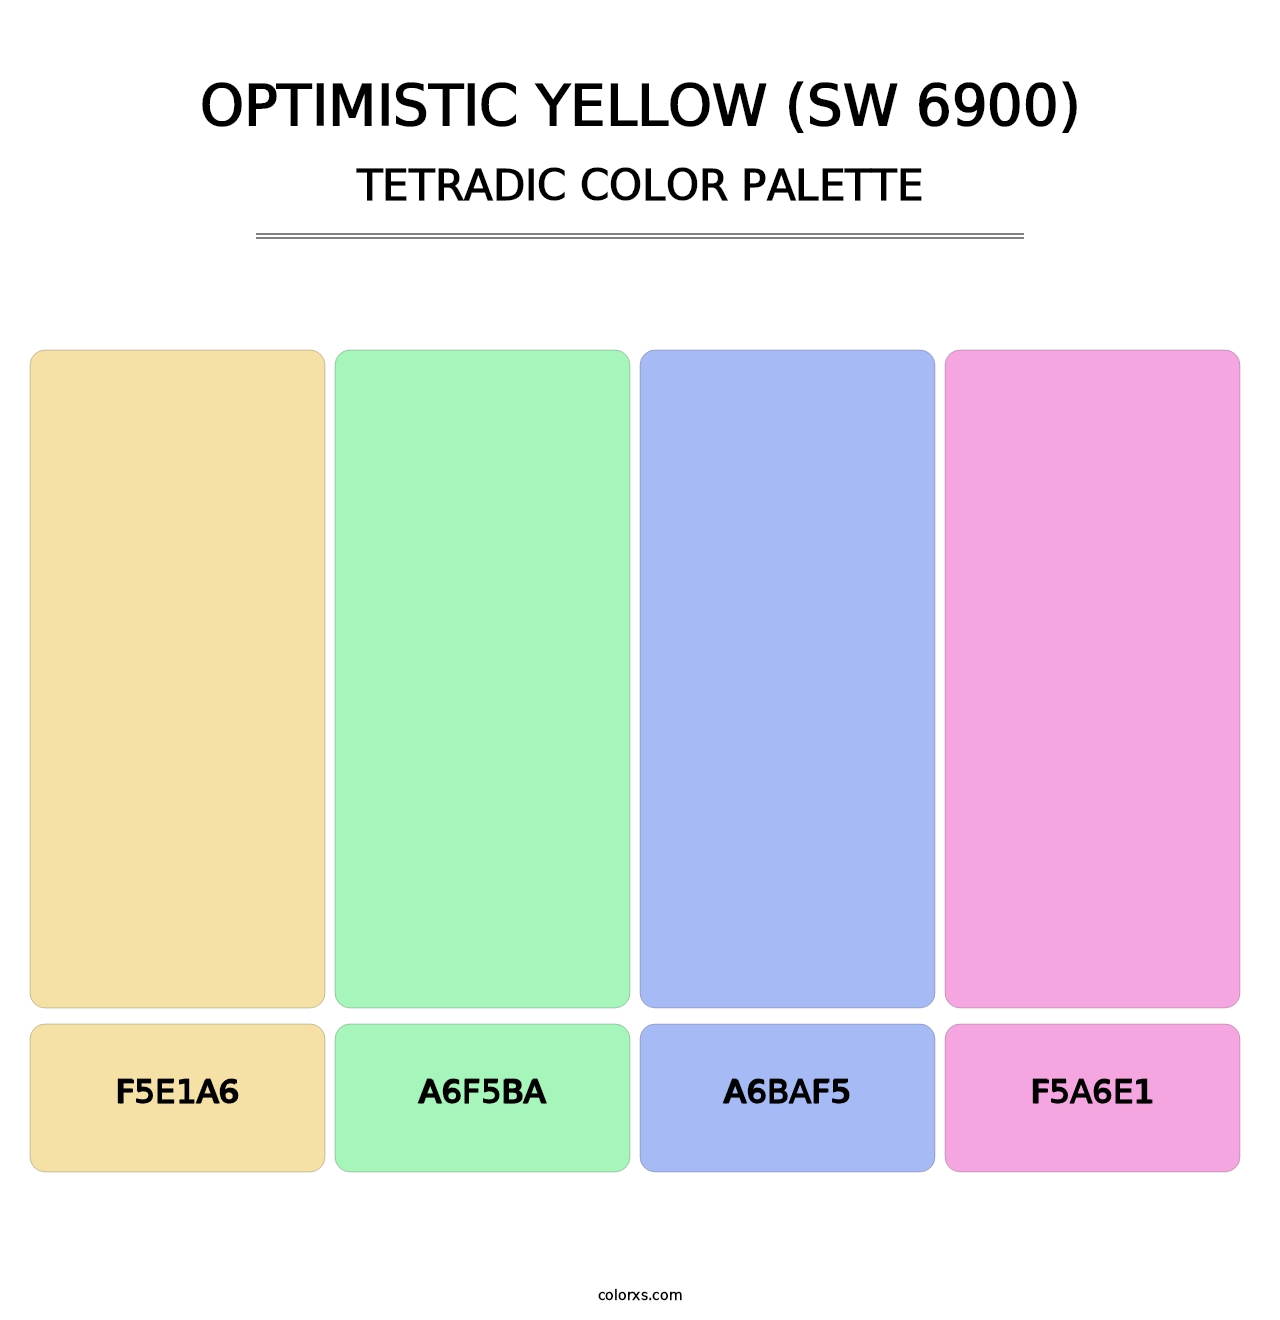 Optimistic Yellow (SW 6900) - Tetradic Color Palette